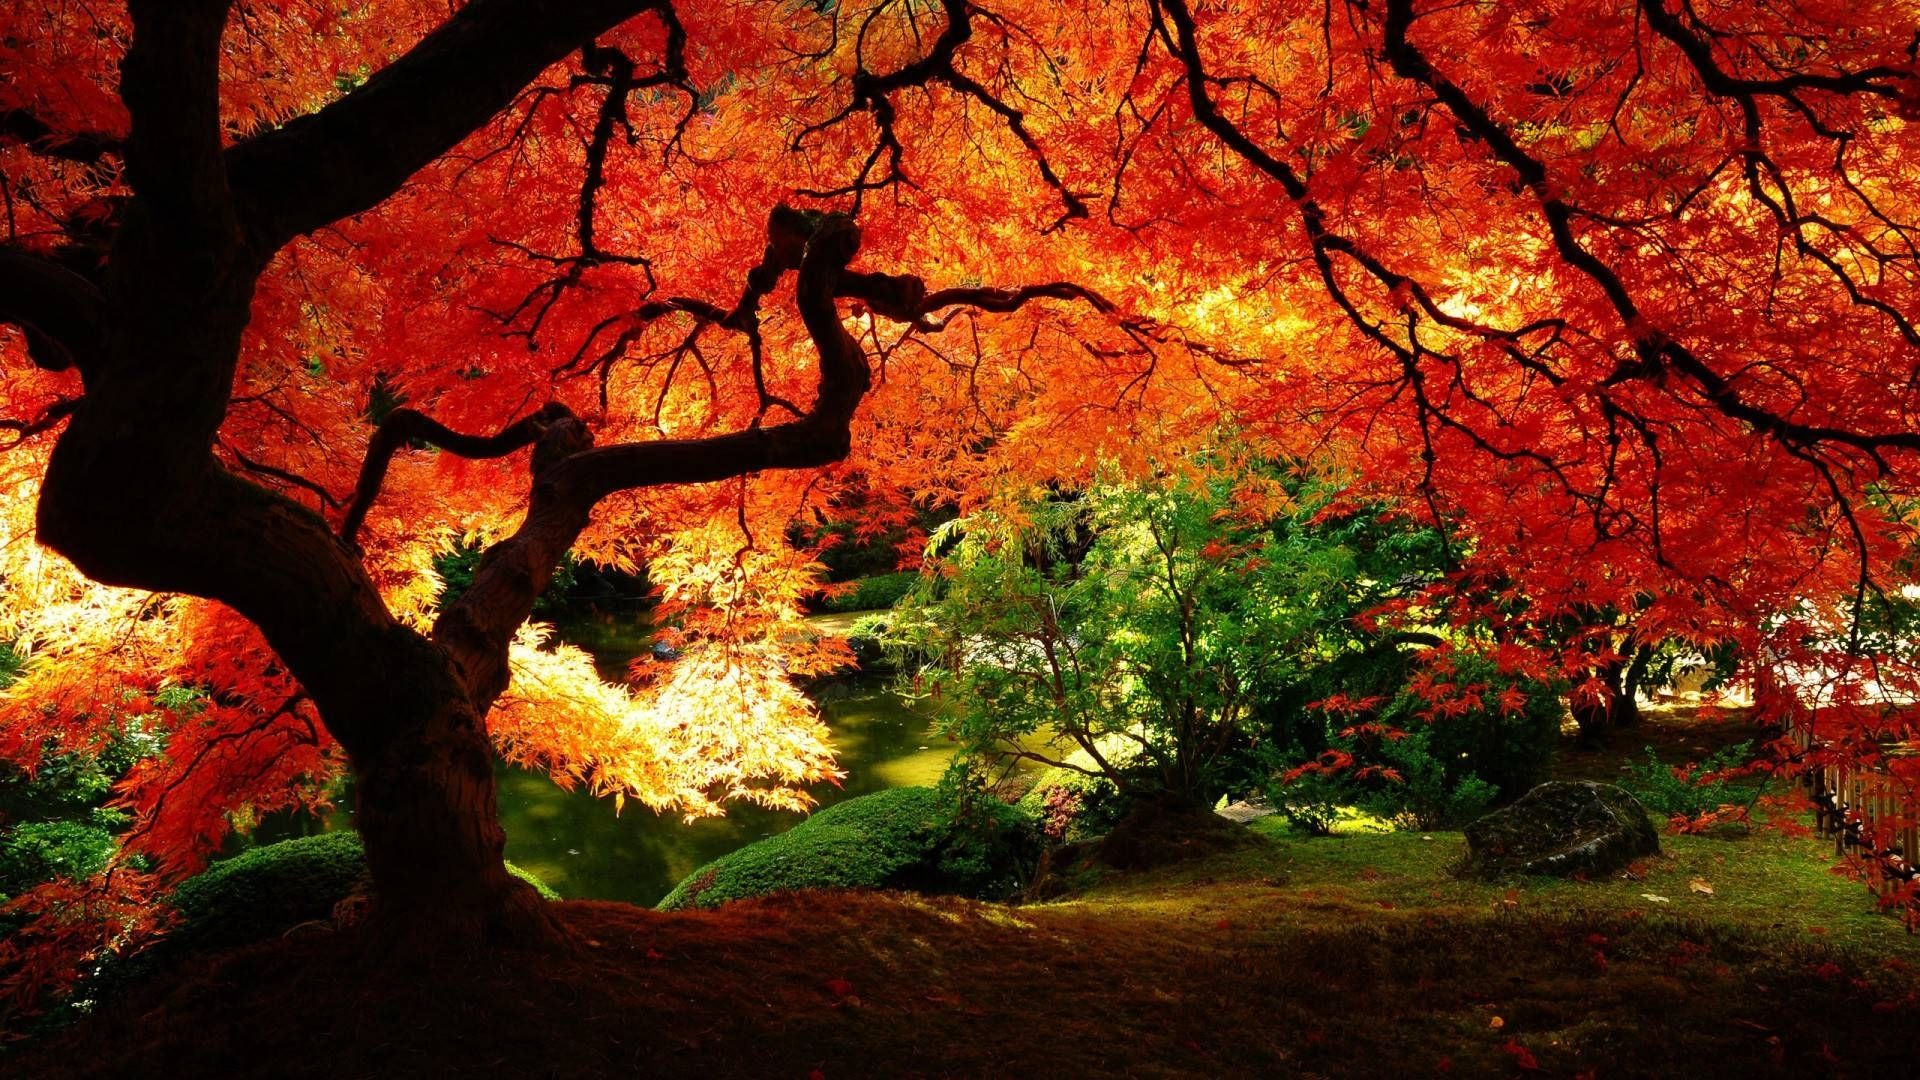 Top Japanese Garden Wallpaper Night FULL HD 1080p For PC Background. Landscape wallpaper, Autumn scenery, Autumn landscape